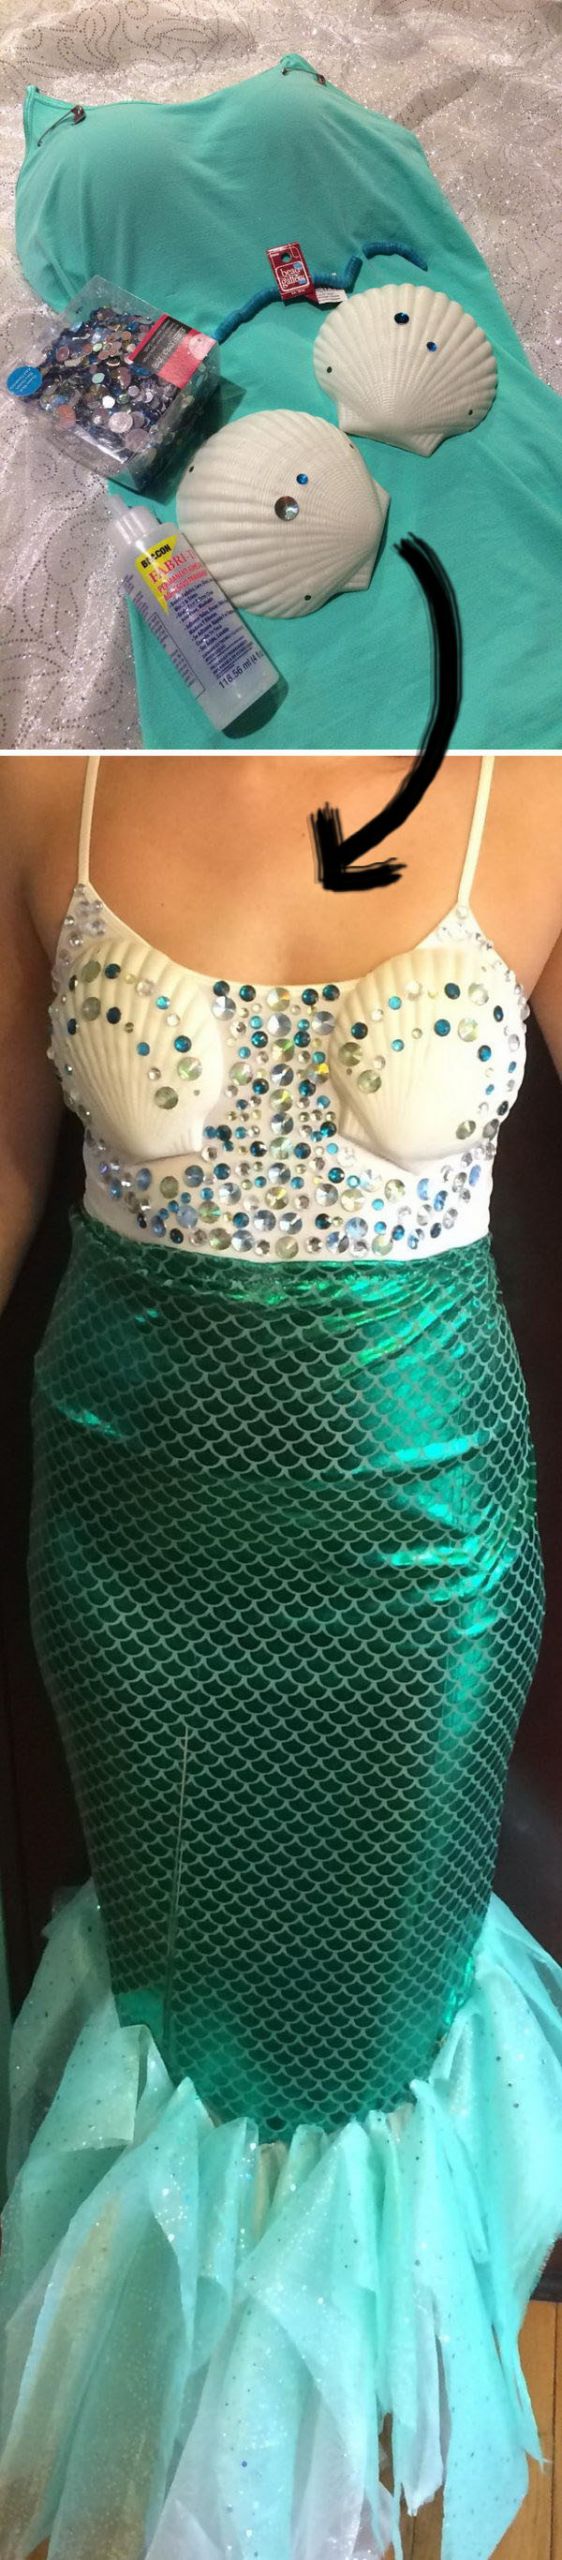 Mermaid Costume Adults DIY
 25 Mermaid Costumes and DIY Ideas 2017